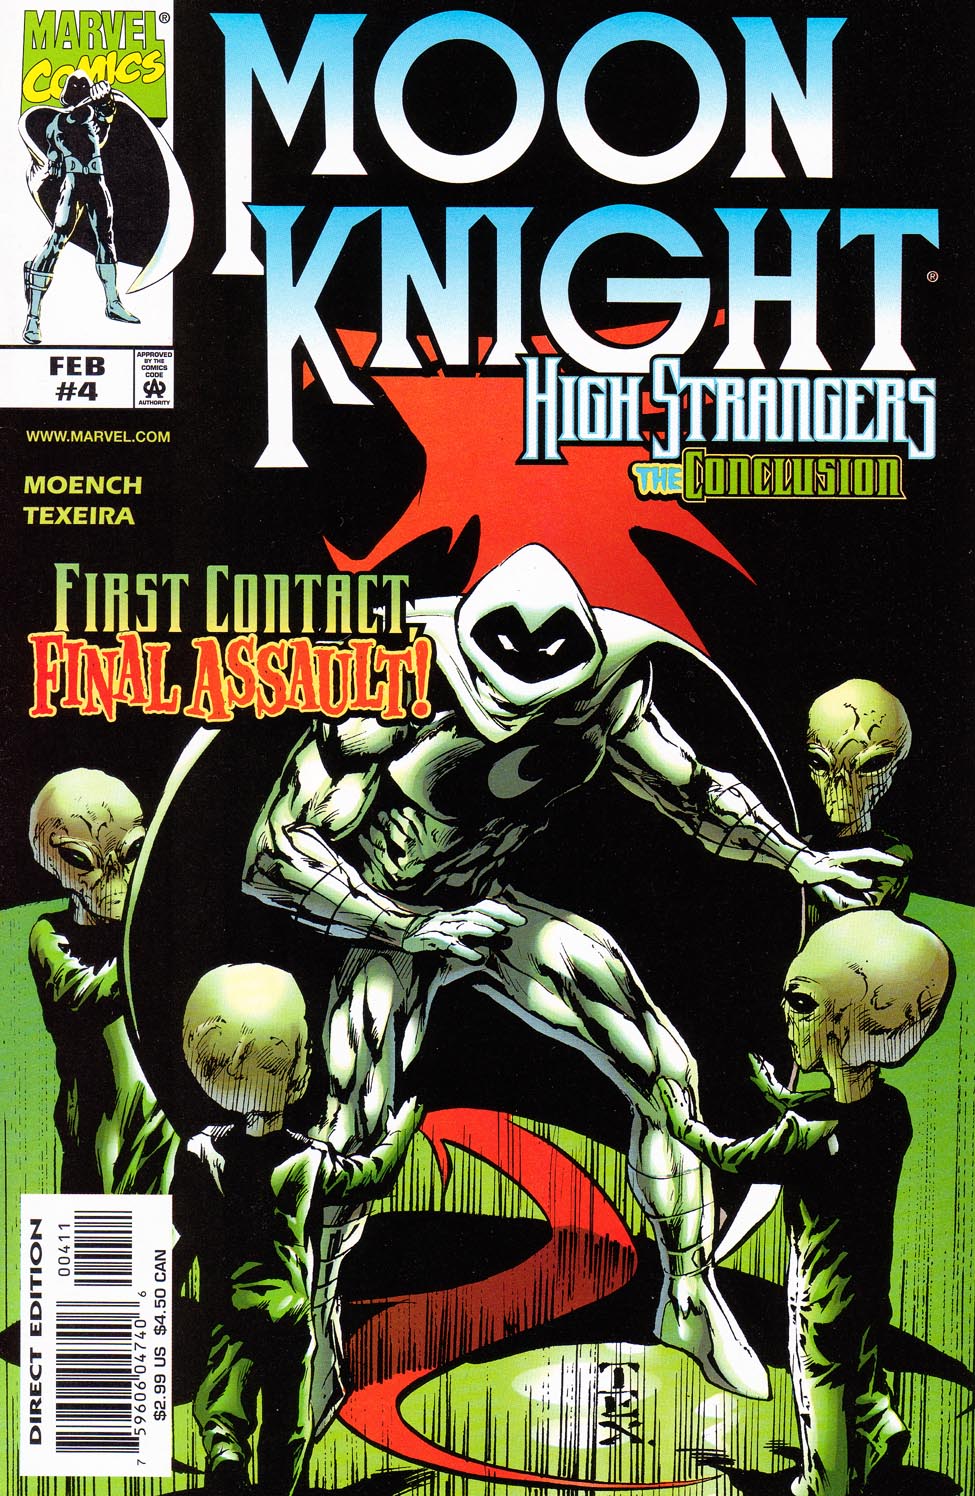 Moon Knight: High Strangers Issue #4 #4 - English 1